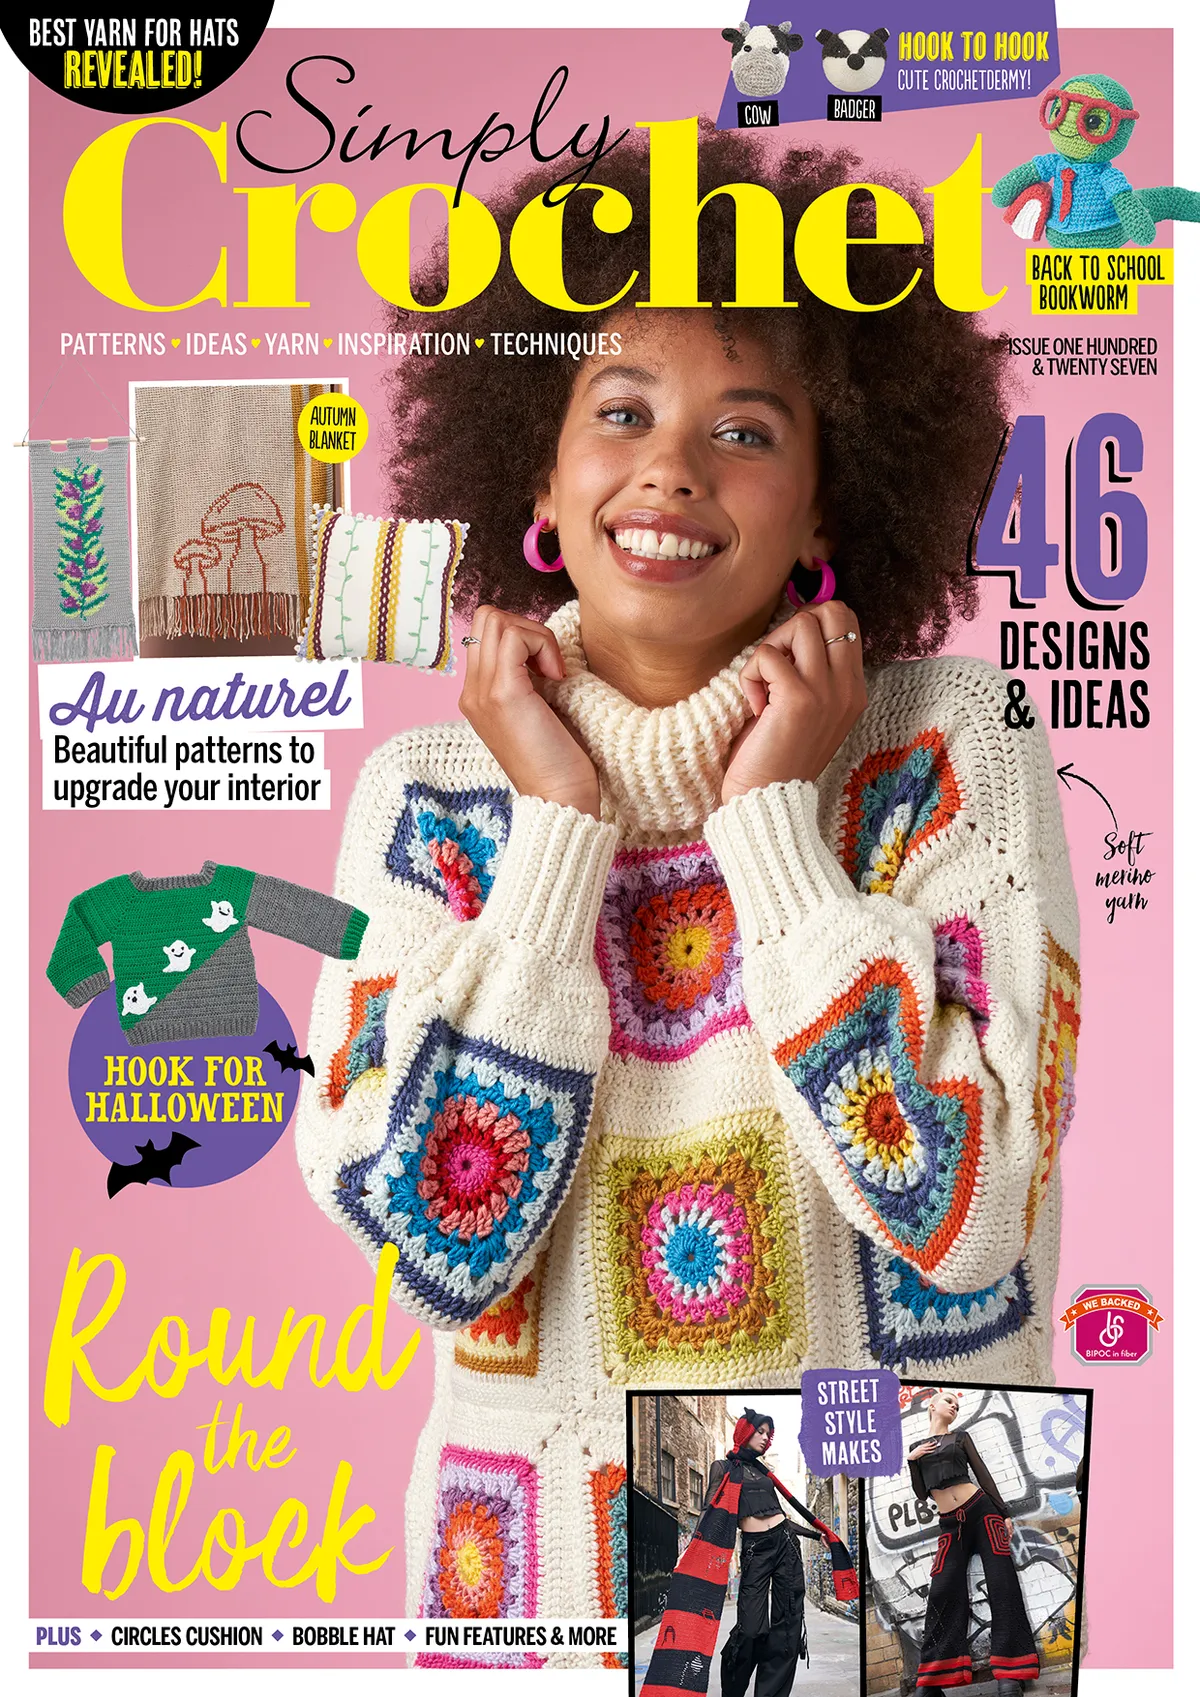 Simply Crochet issue 127 digi cover